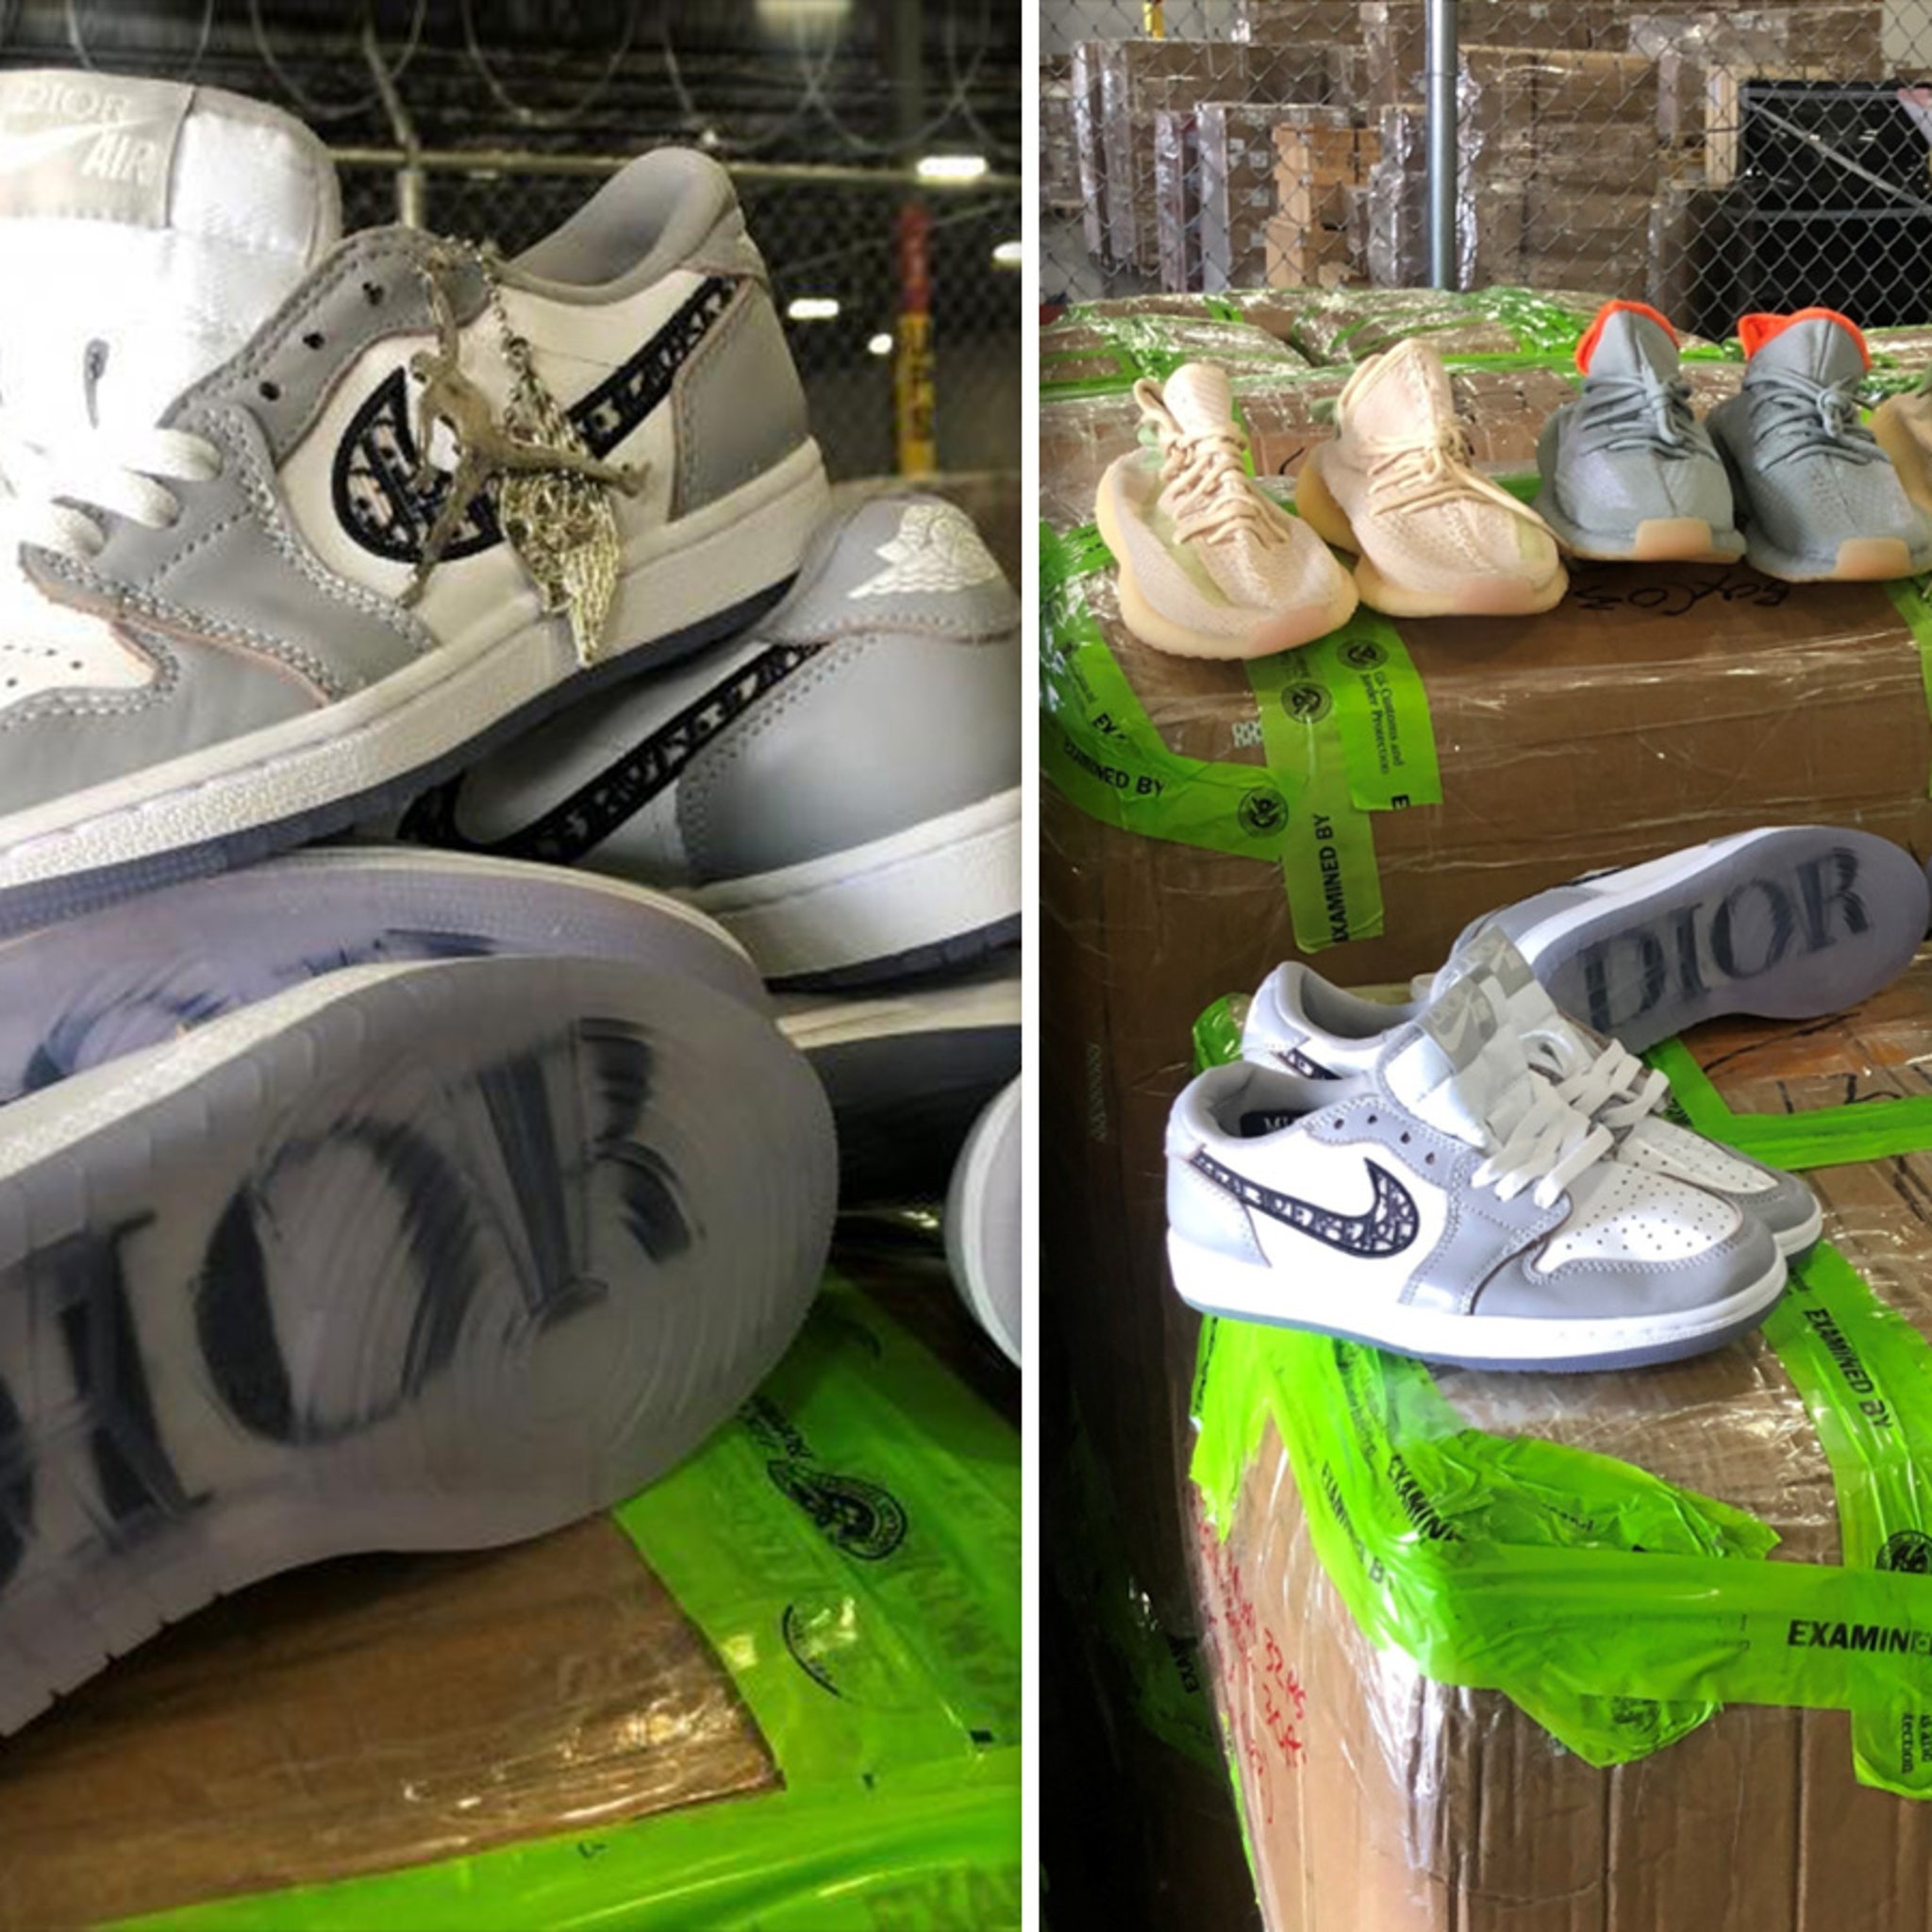 More than 14,000 fake Nikes were seized in LA